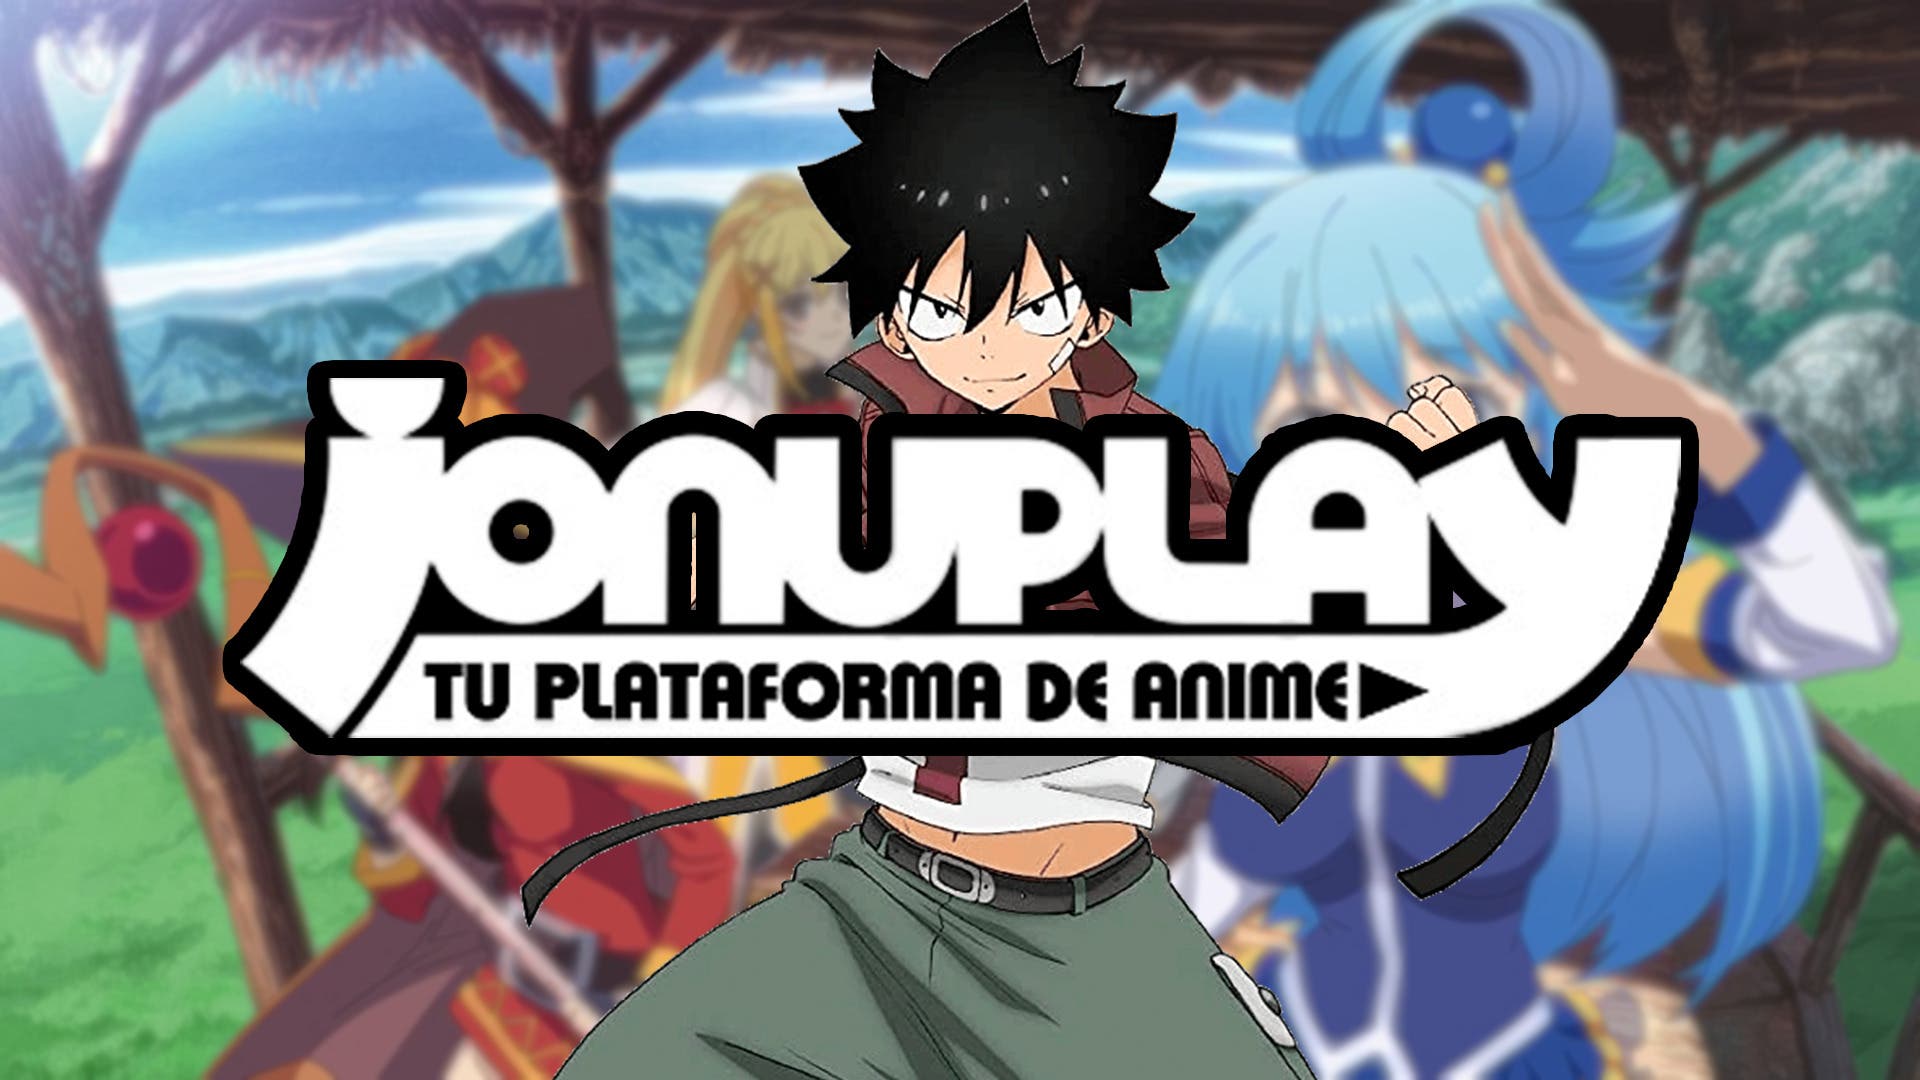 Jonu Play, the platform to consider if you like anime